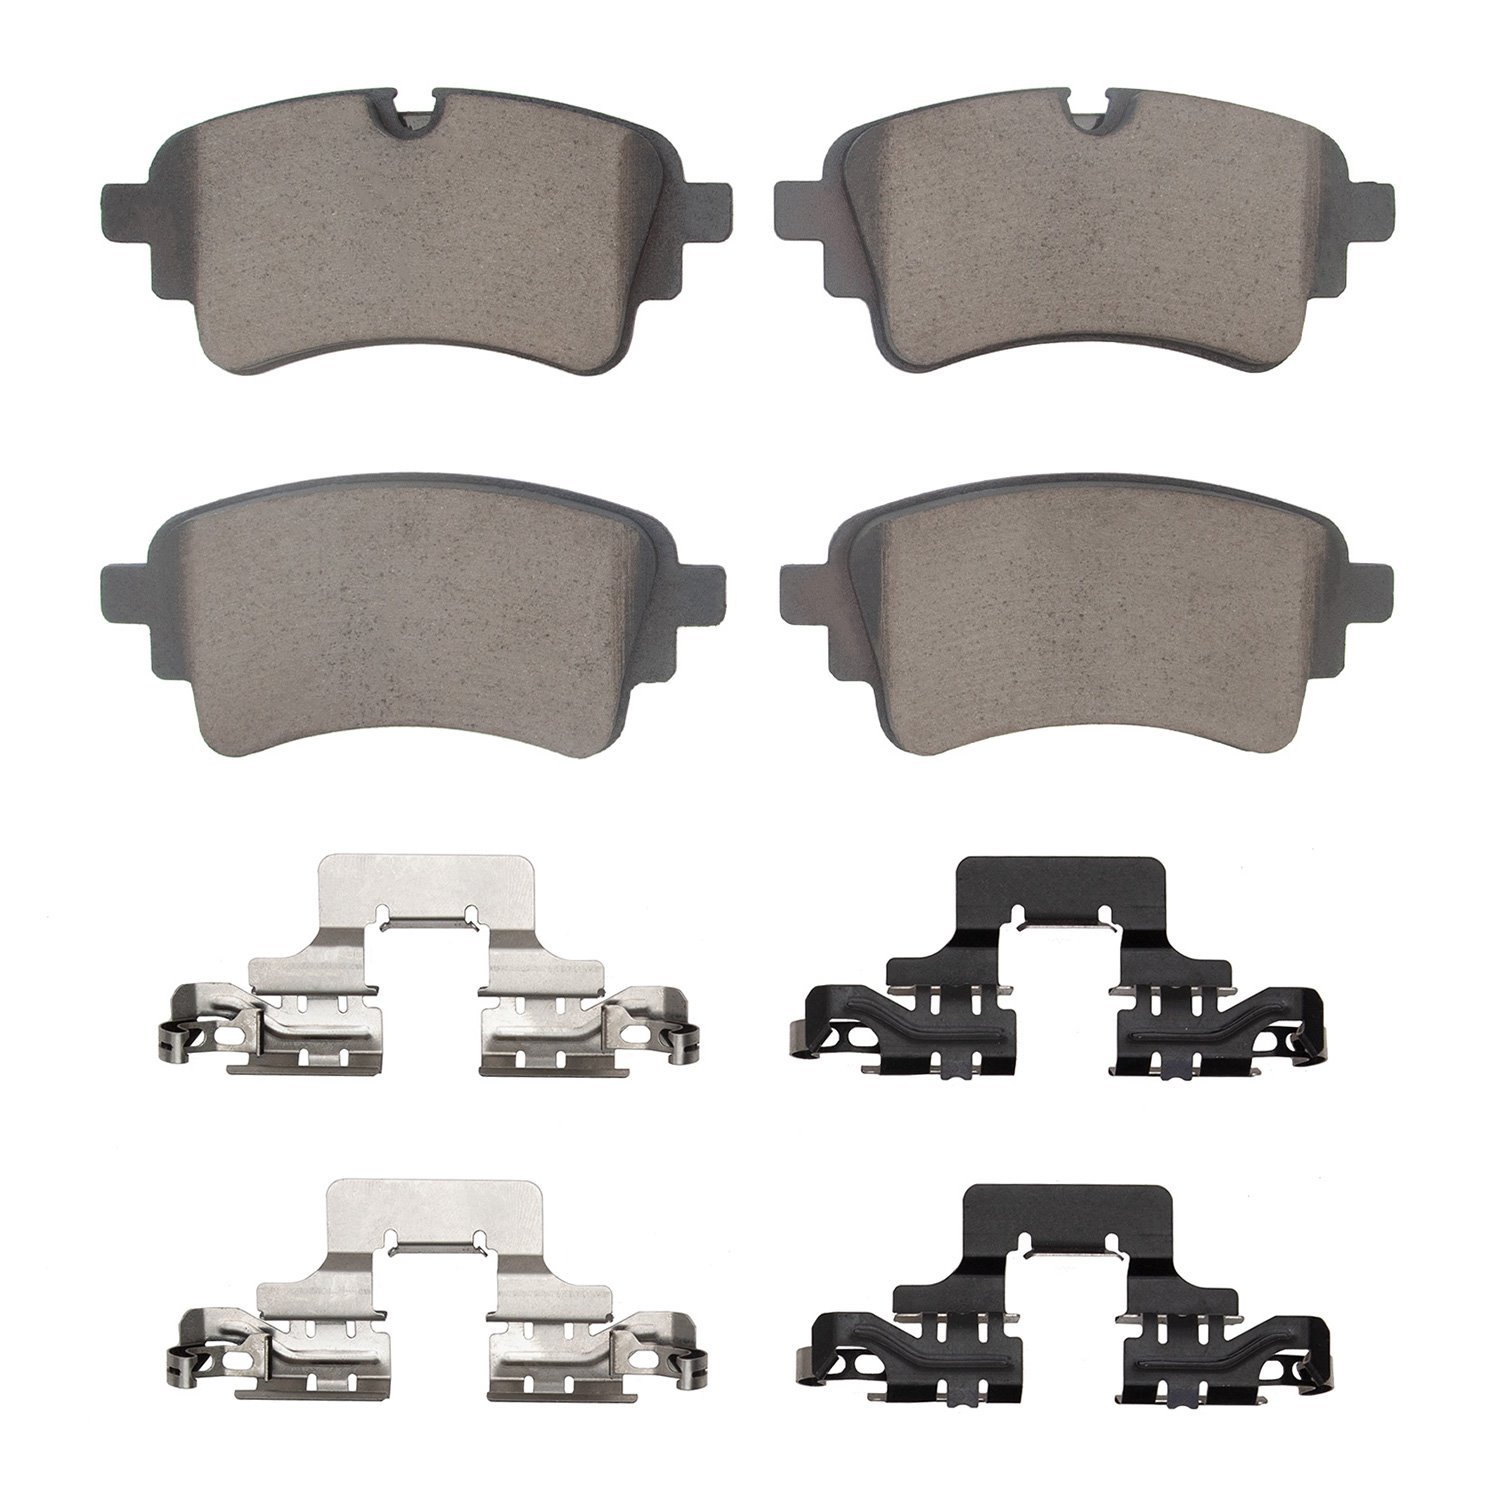 1600-2364-02 5000 Euro Ceramic Brake Pads & Hardware Kit, Fits Select Audi/Volkswagen, Position: Rear